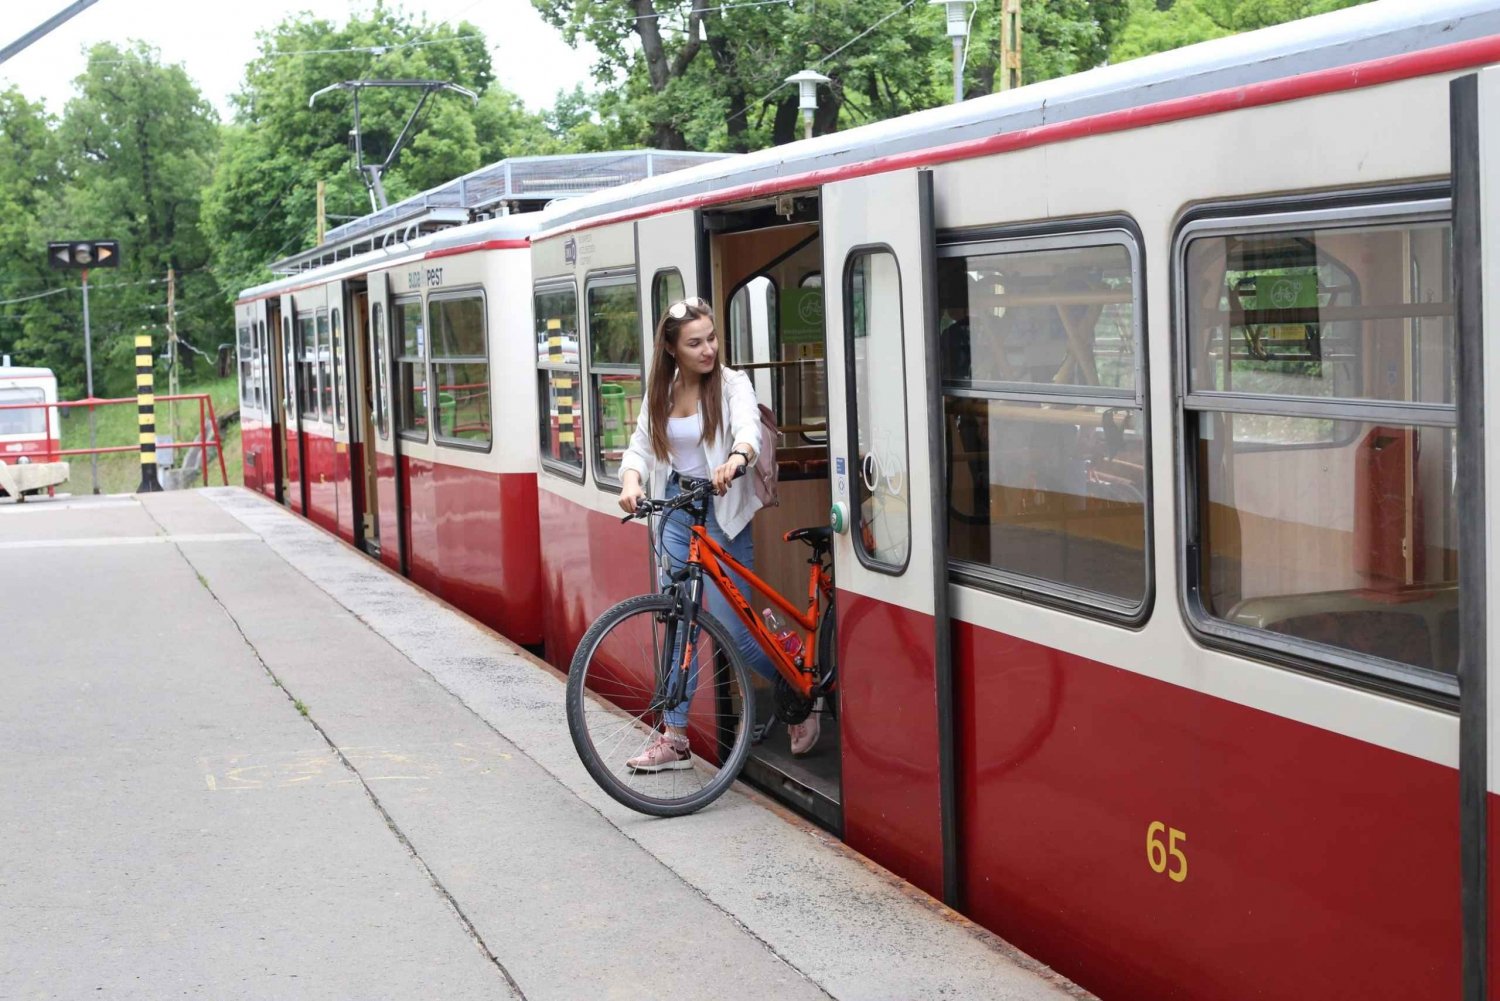 Budapest Adventure Sightseeing Bike Tour